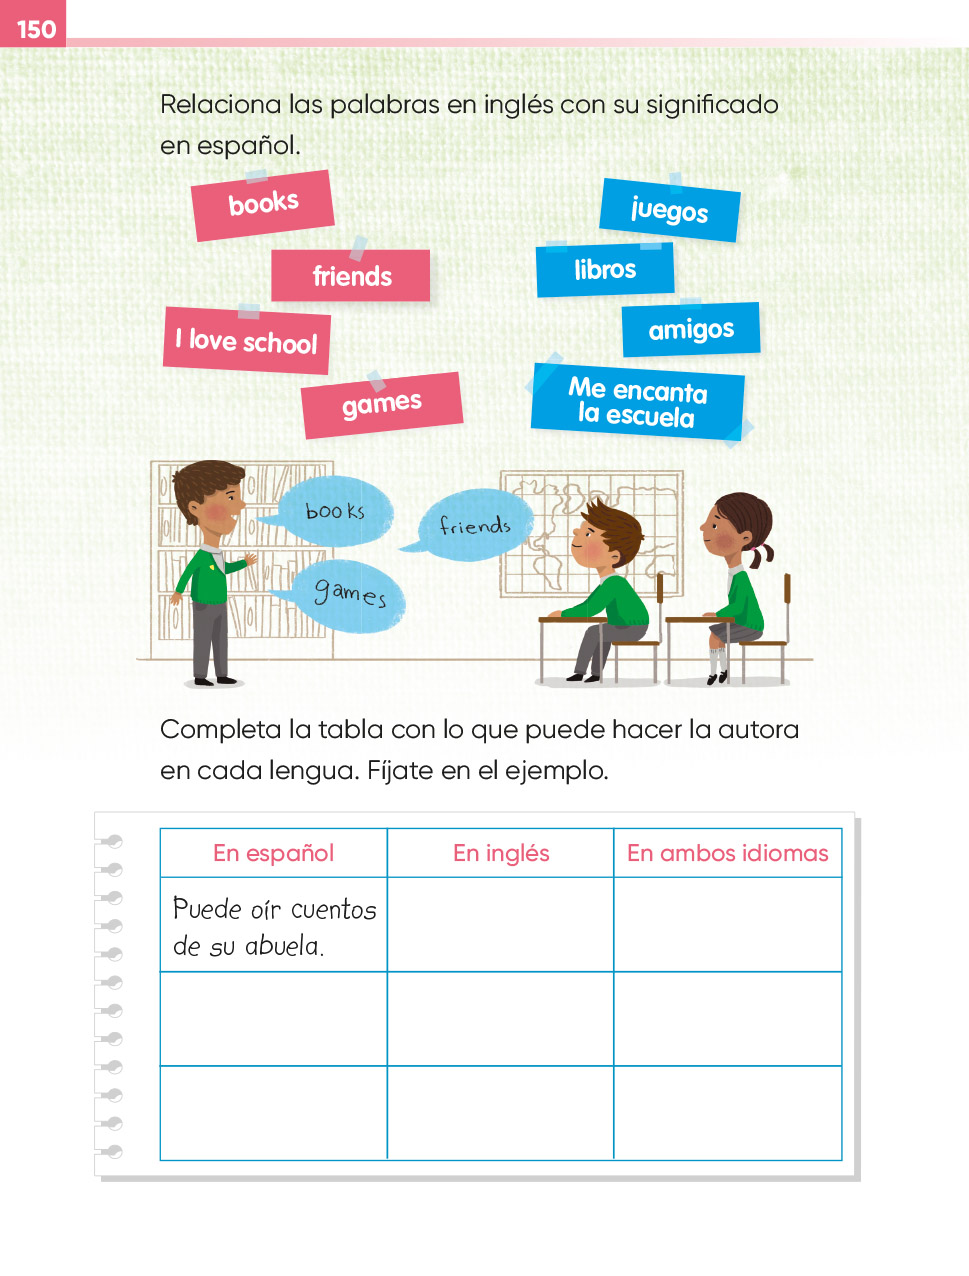 Lengua Materna Español Segundo Grado 2020 2021 Página 150 De 225 Libros De Texto Online 4483